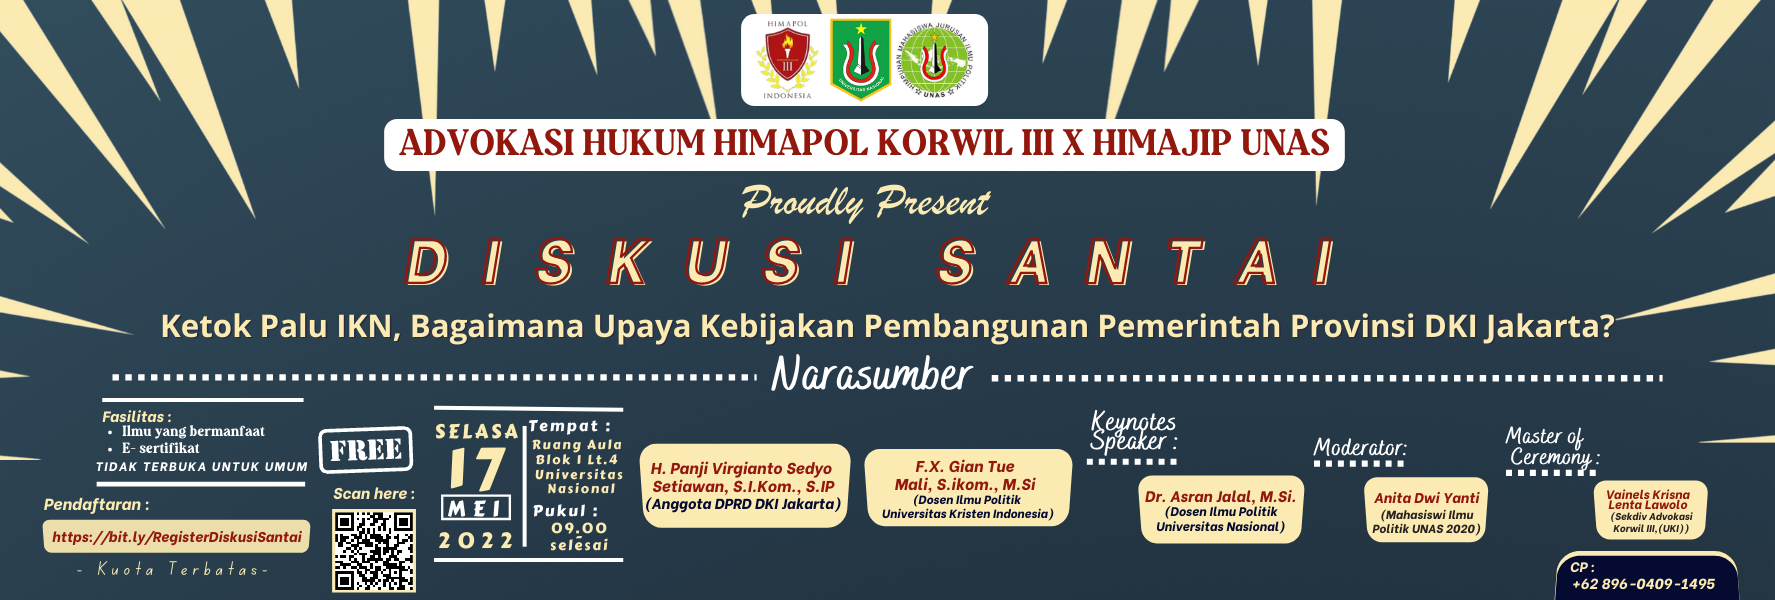 Diskusi Santai Advokasi Hukum HIMAPOL Indonesia KORWIL III x HIMAJIP UNAS